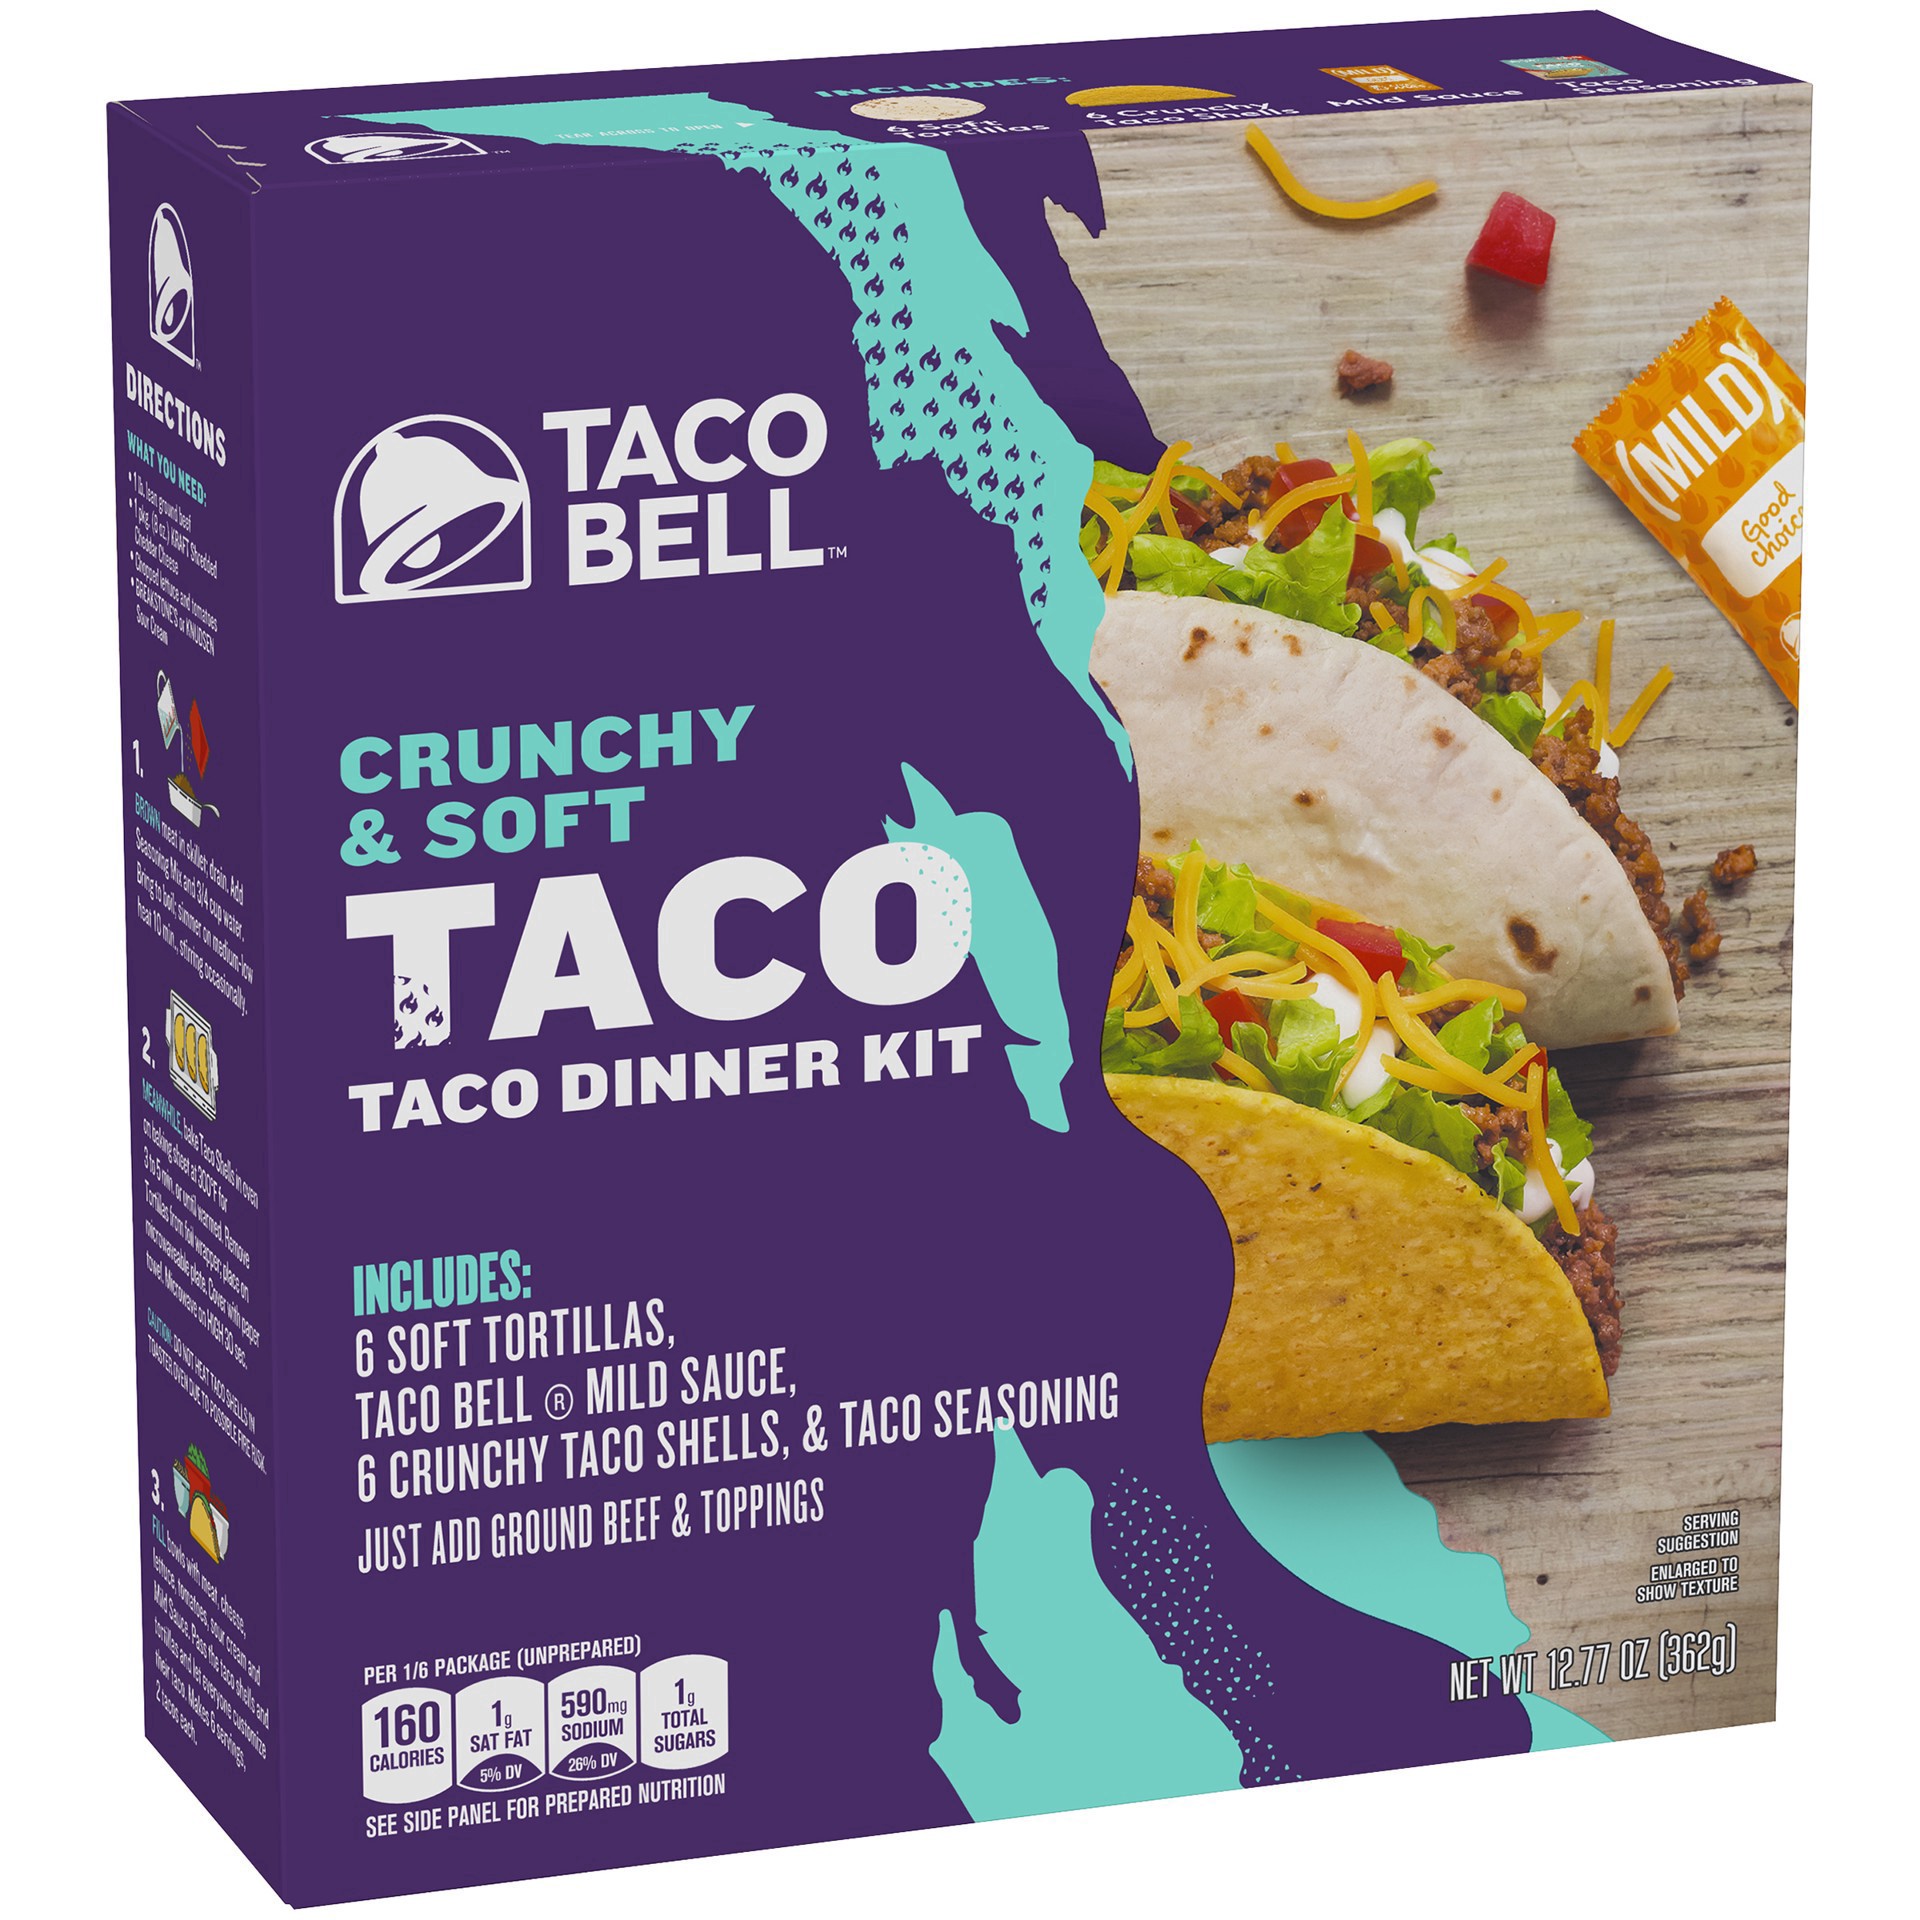 slide 40 of 101, Taco Bell Crunchy & Soft Taco Cravings Kit with 6 Soft Tortillas, 6 Crunchy Taco Shells, Taco Bell Mild Sauce & Seasoning, 12.77 oz Box, 1 ea